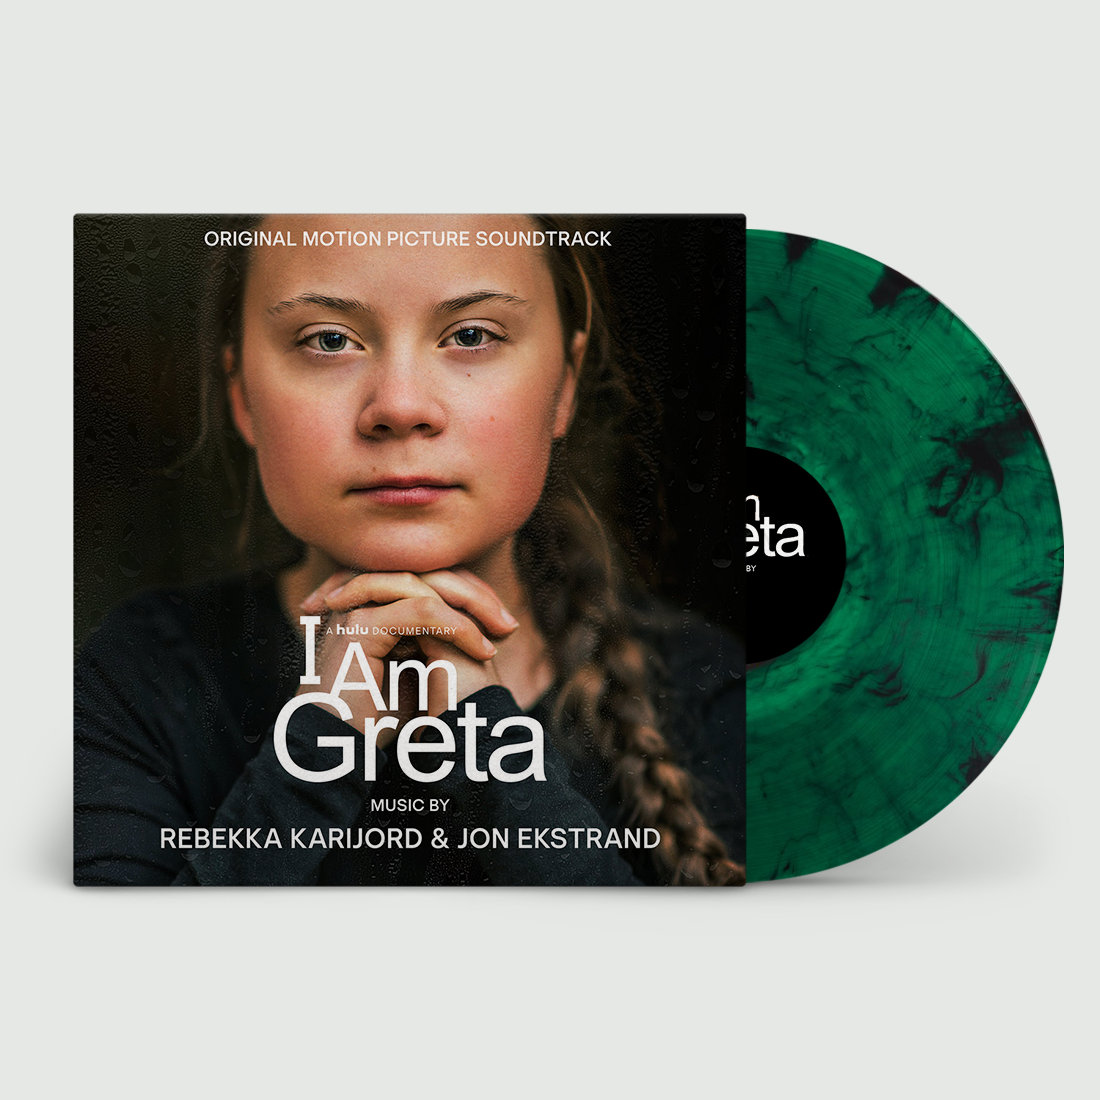 Rebekka Karijord, Jon Ekstrand - I Am Greta - Original Motion Picture Soundtrack: Limited Edition Green Swirl Vinyl LP